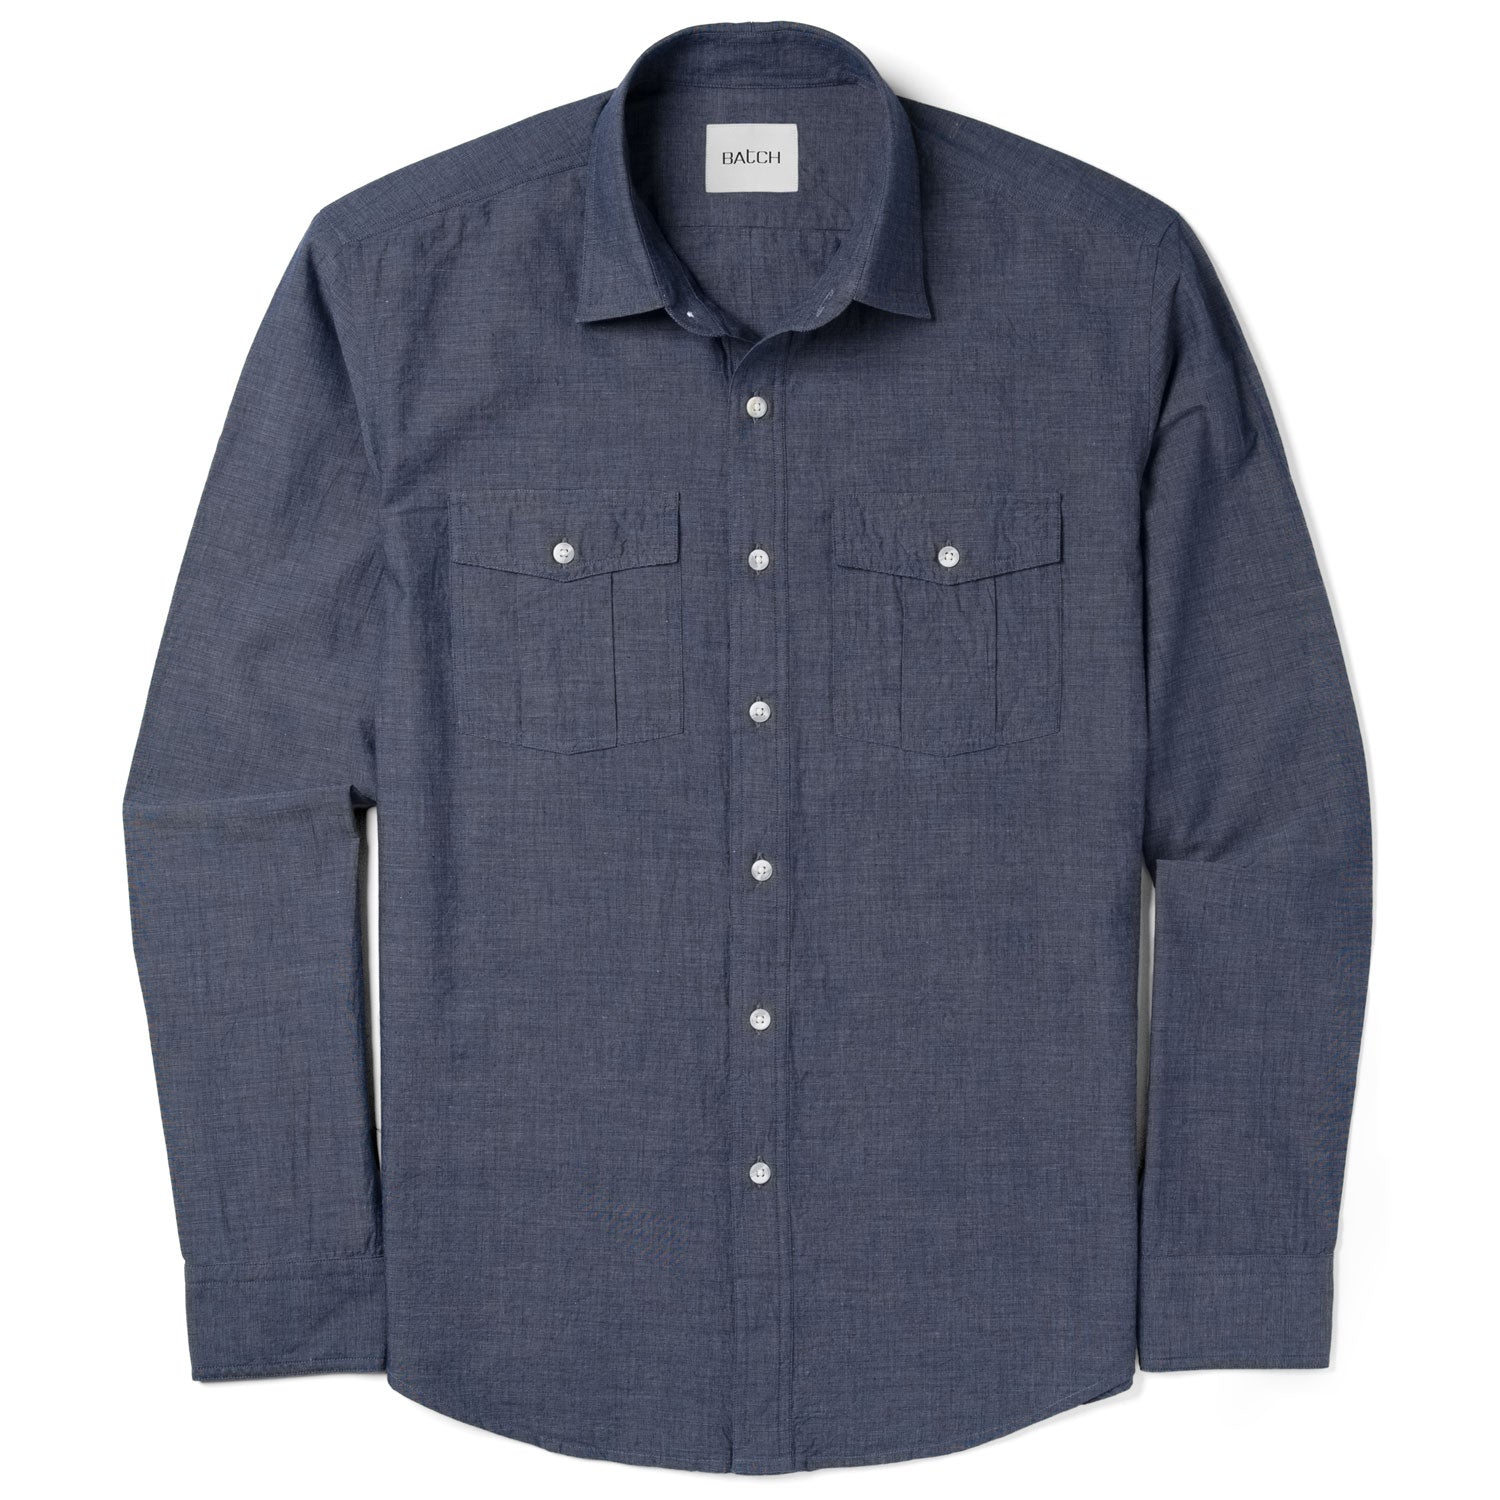 Primer WB Utility Shirt – Navy Blue Cotton End-On-End